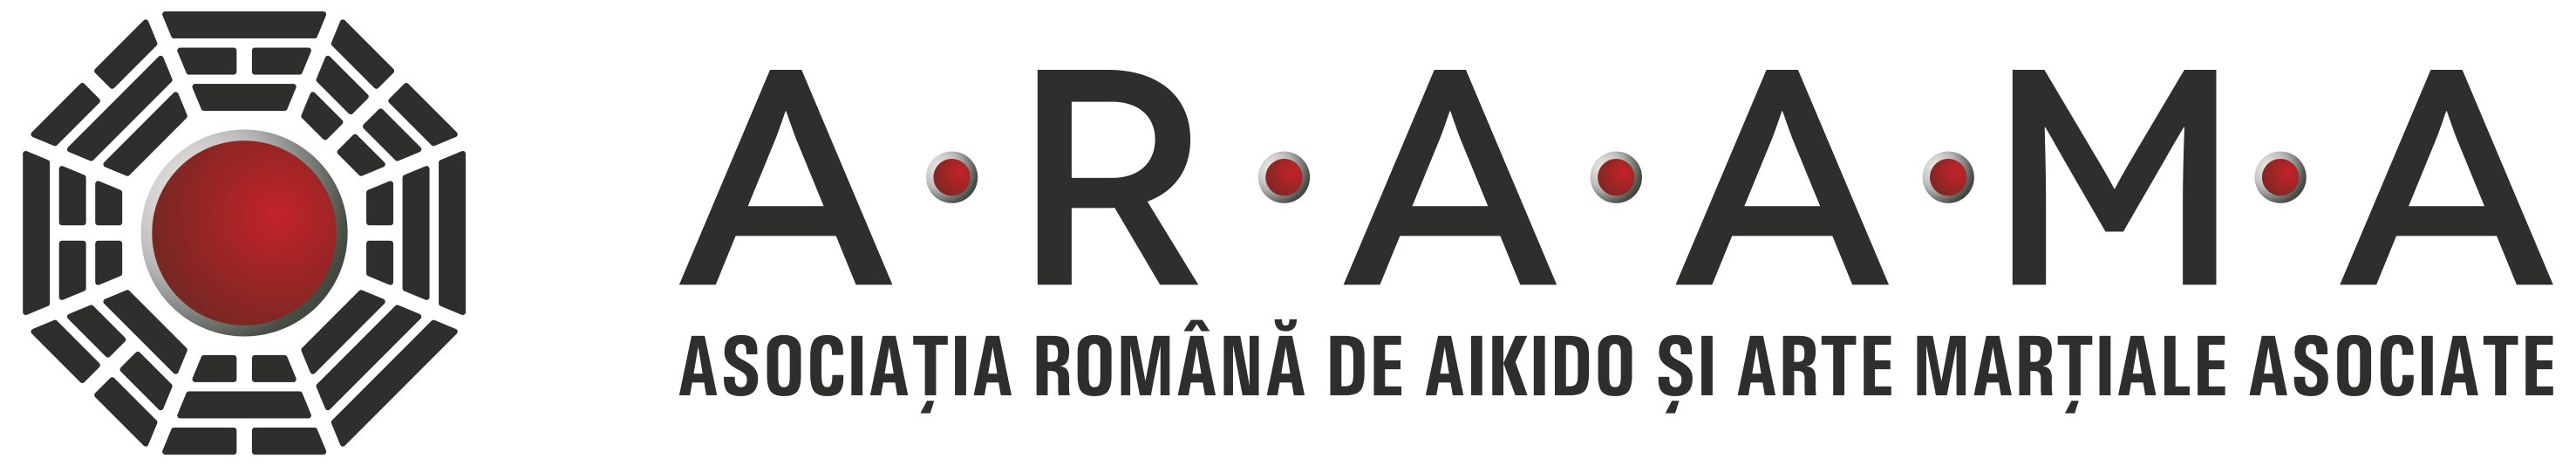 ARAAMA _ logo 2